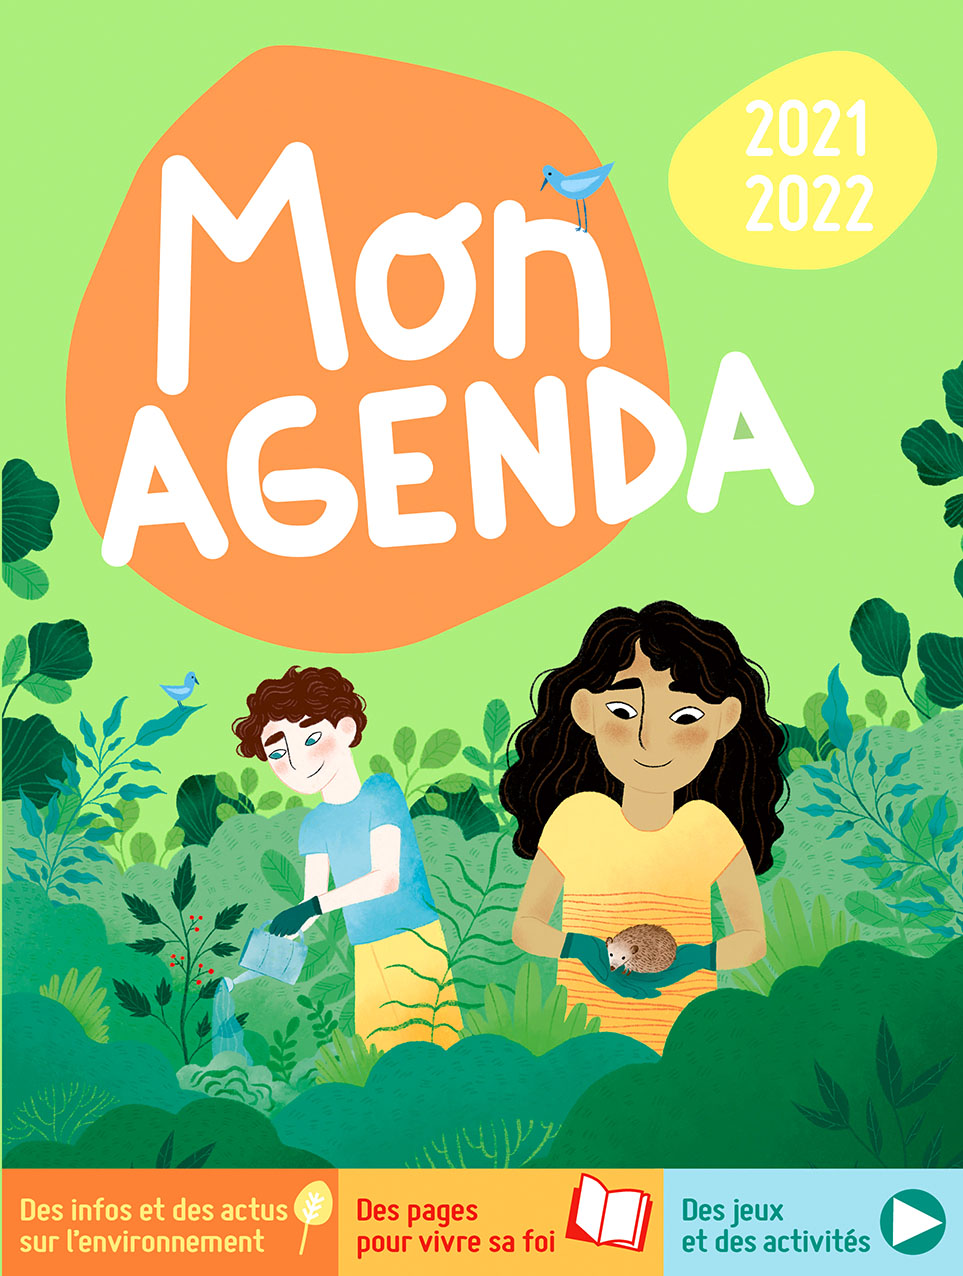 Couverture d'agenda 2021-2022 - Bayard presse